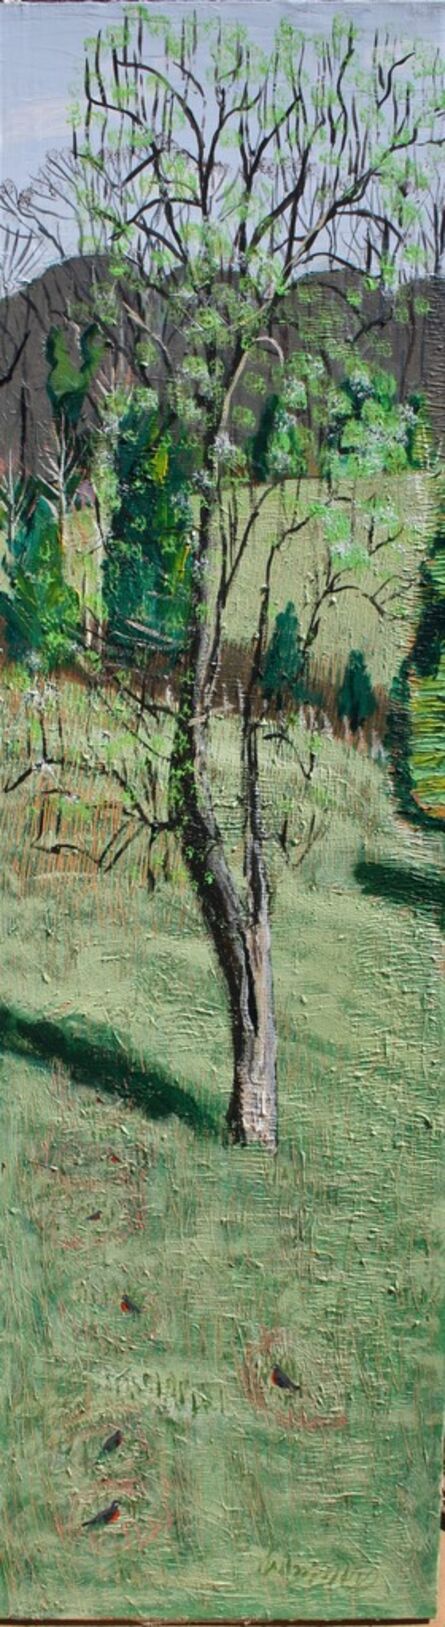 John Borden Evans, ‘Spring Pear Tree’, 2017